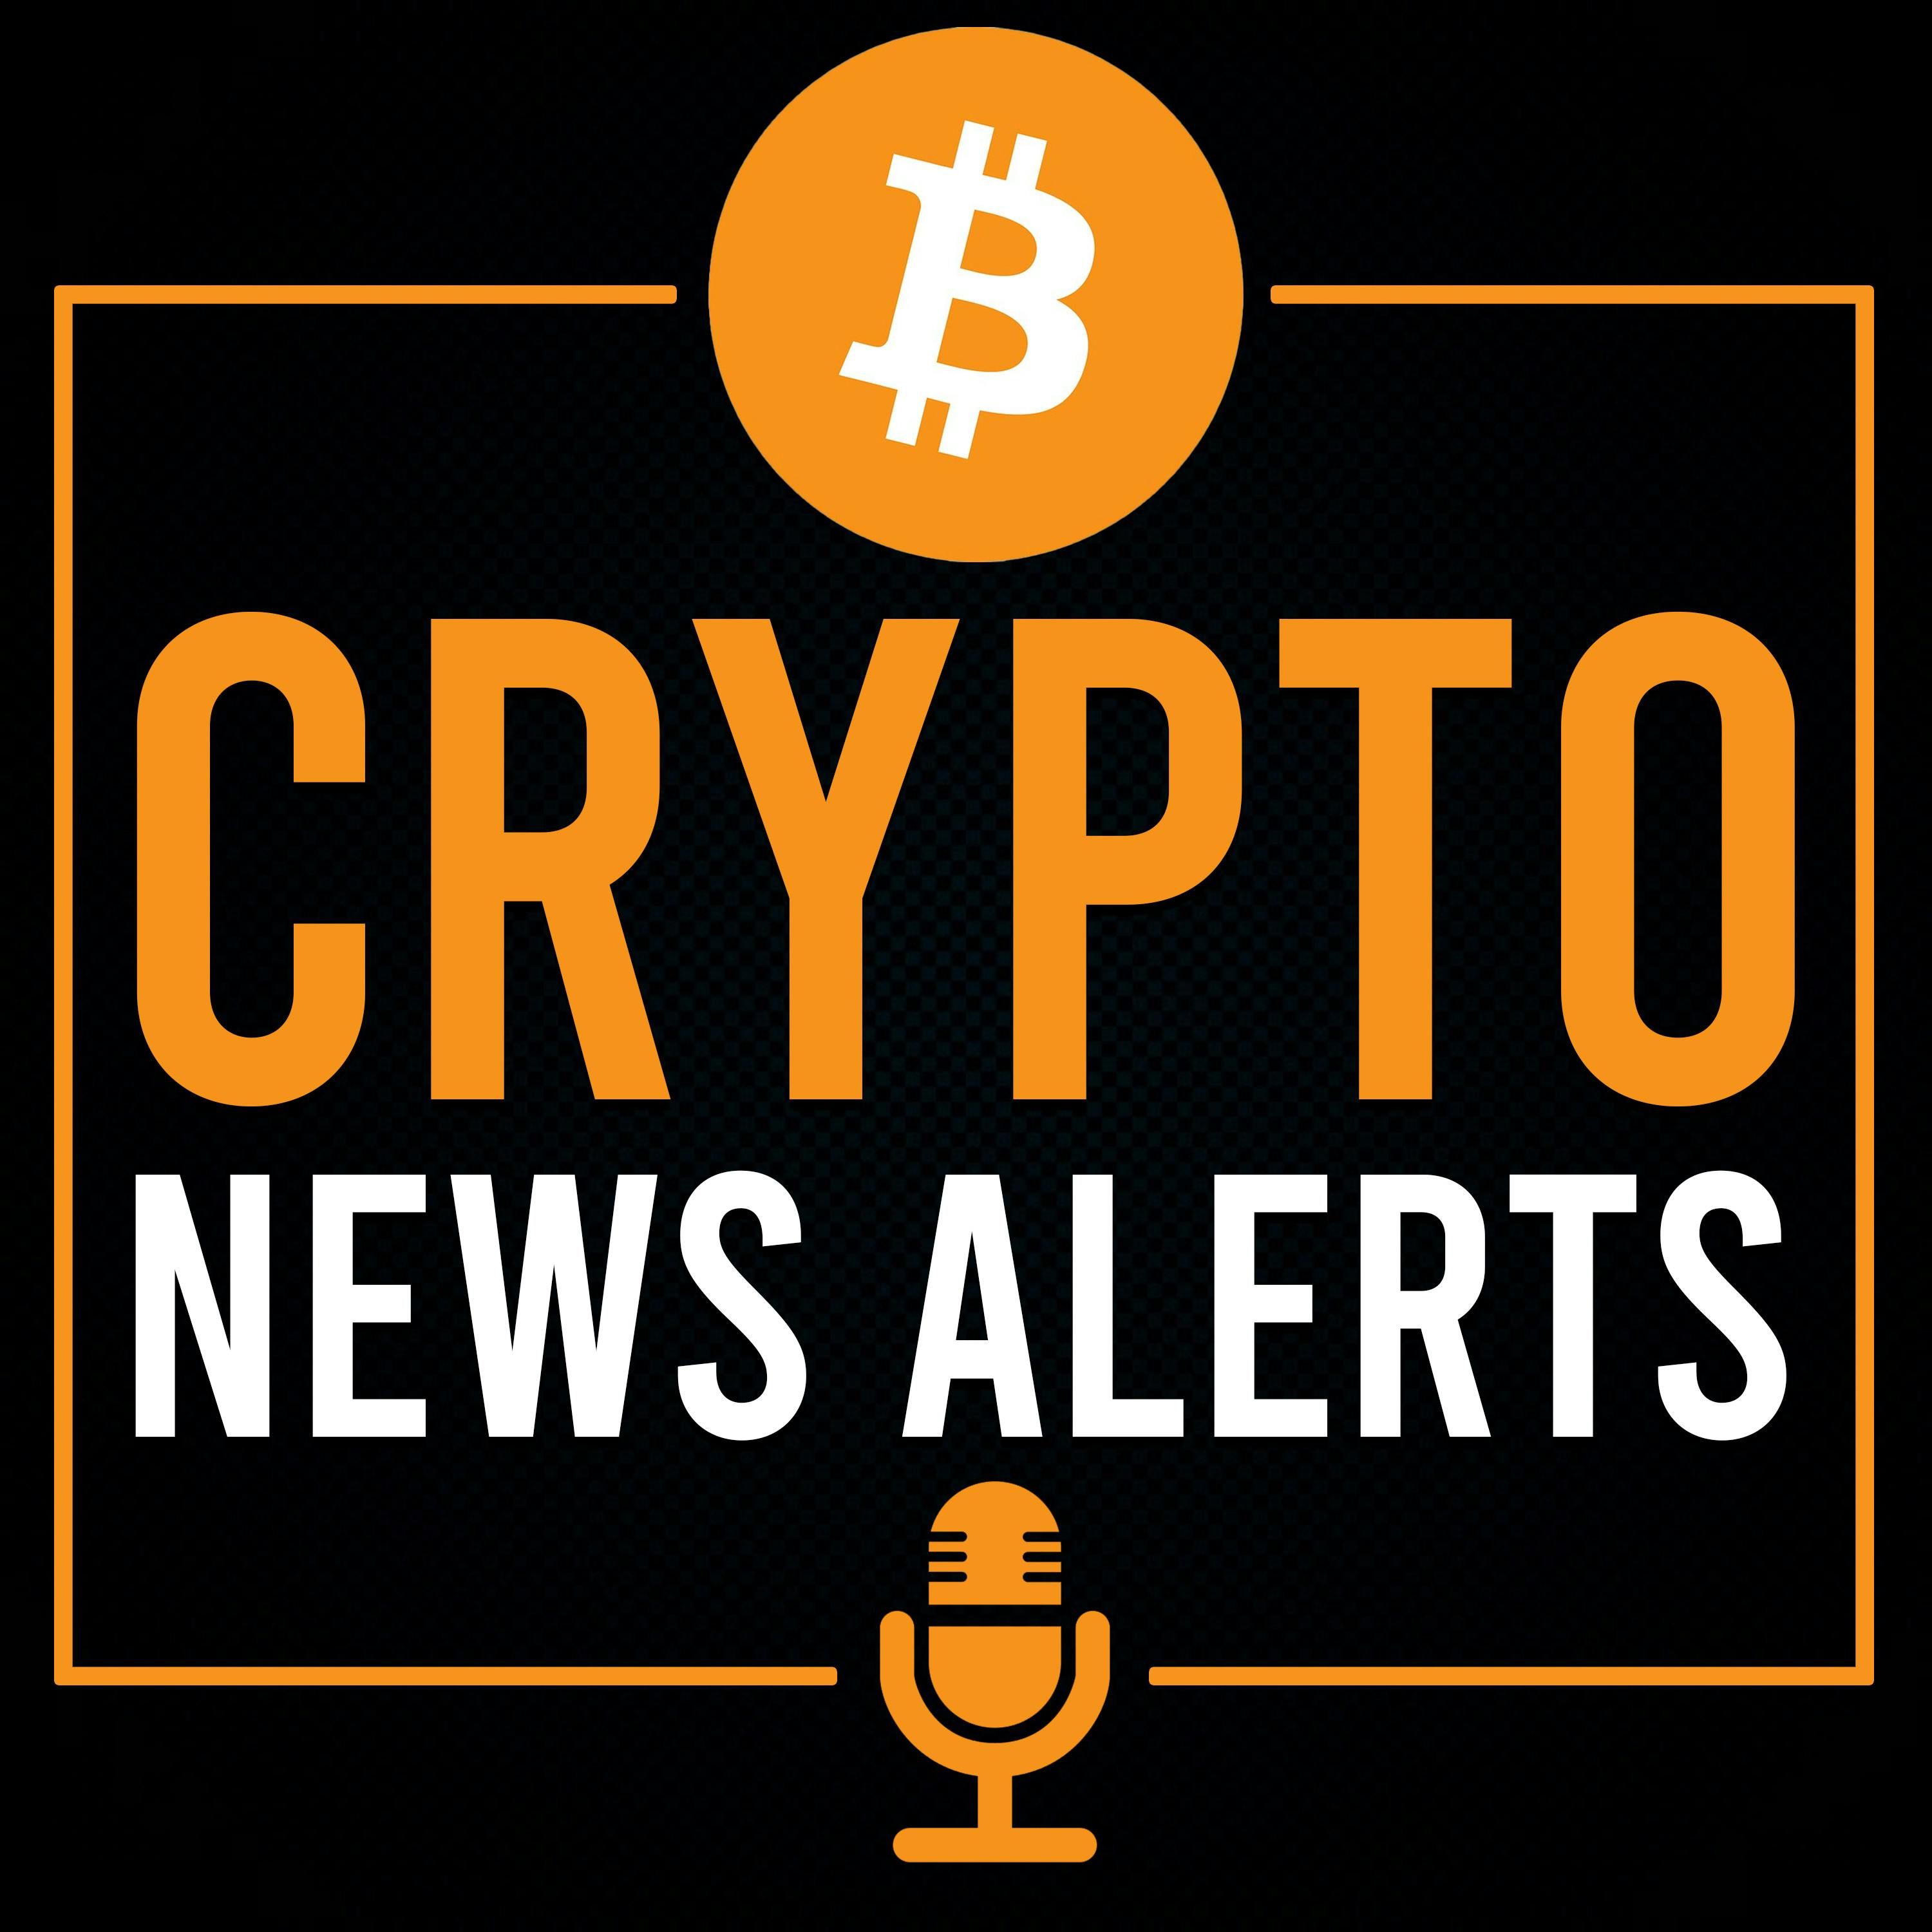 1644: “Bitcoin Will Reach At Least $1 Million” – Jack Dorsey